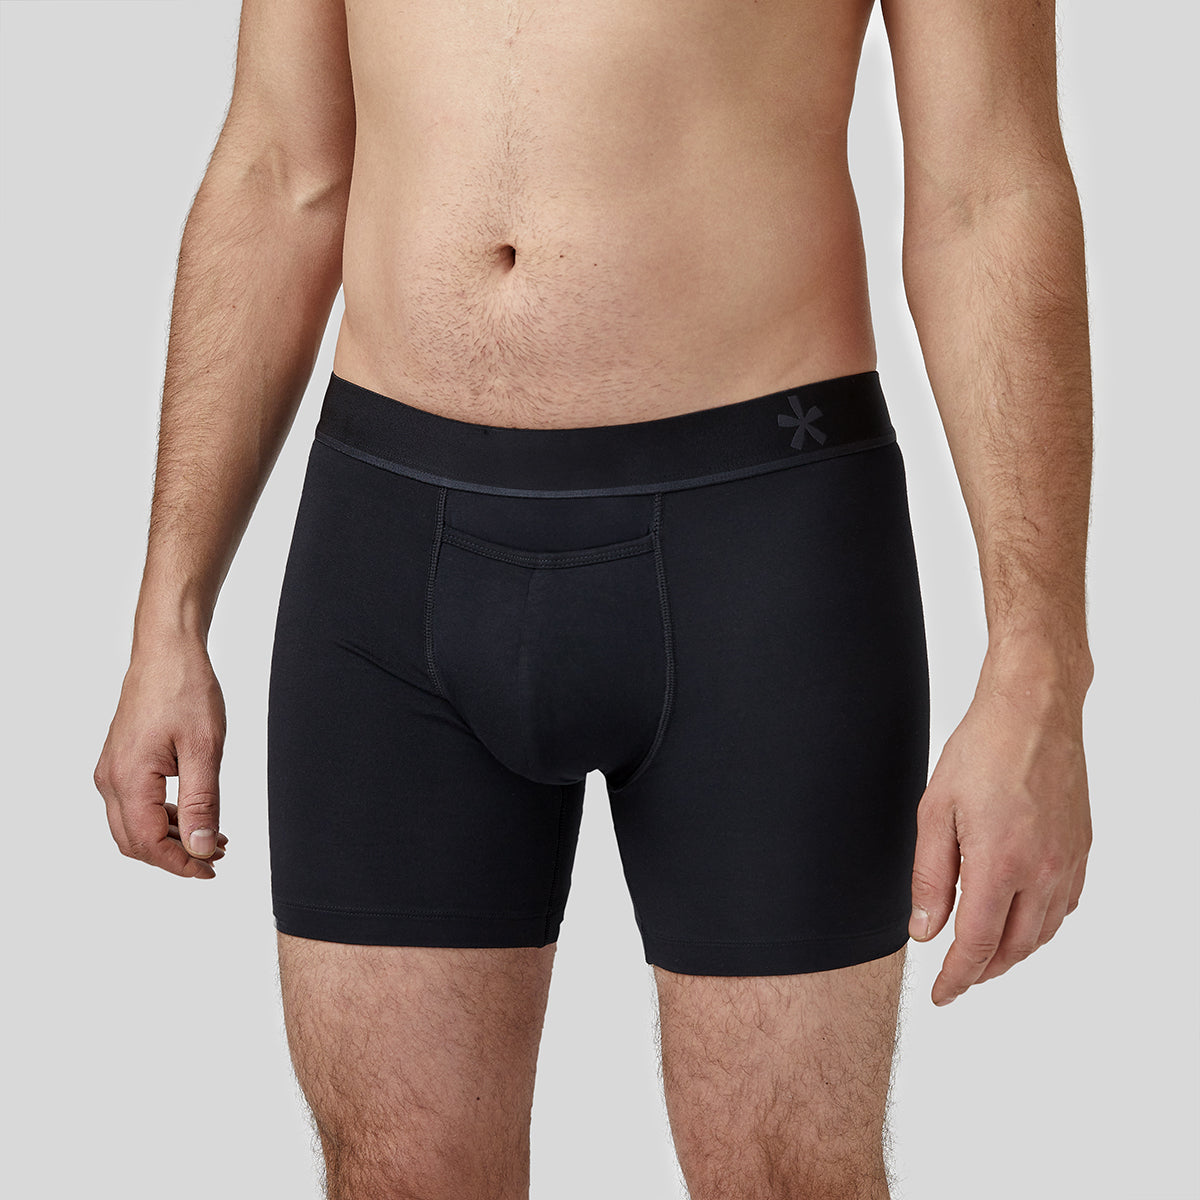 5 Pack A-dam Adam Mens Organic Cotton Sensitive Skin Trunks Underwear S-2XL